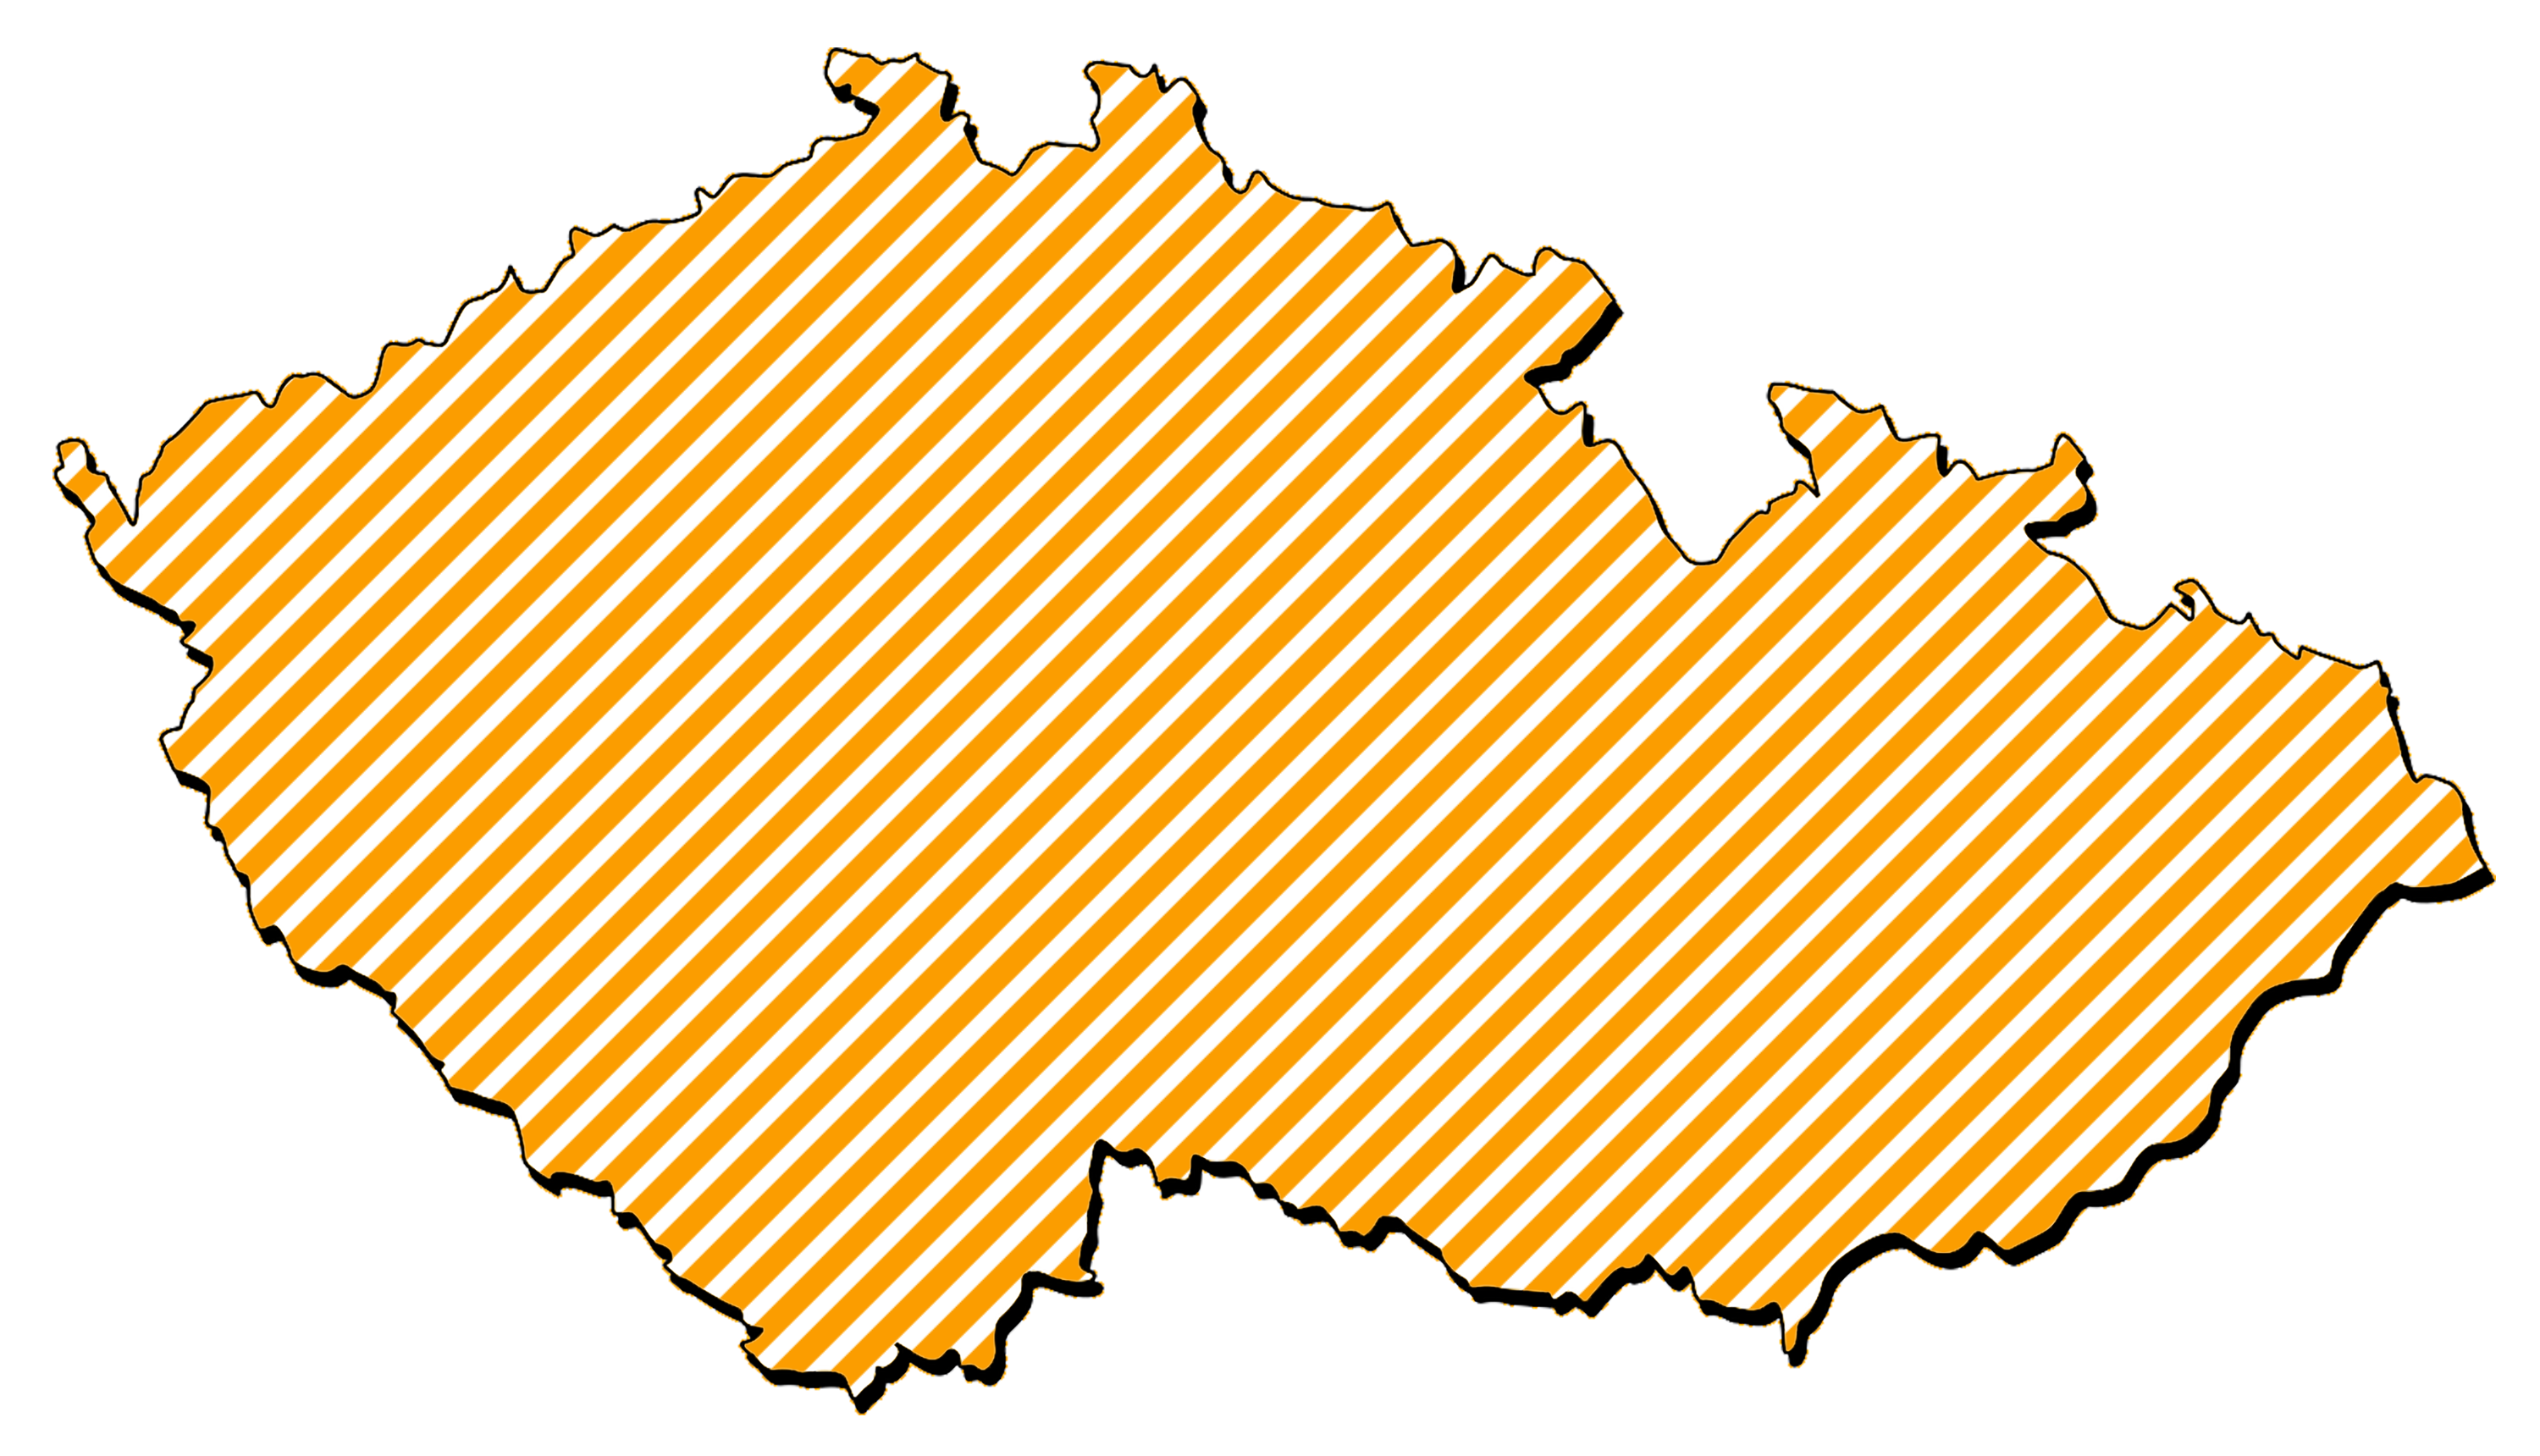 Map of Czech Republic